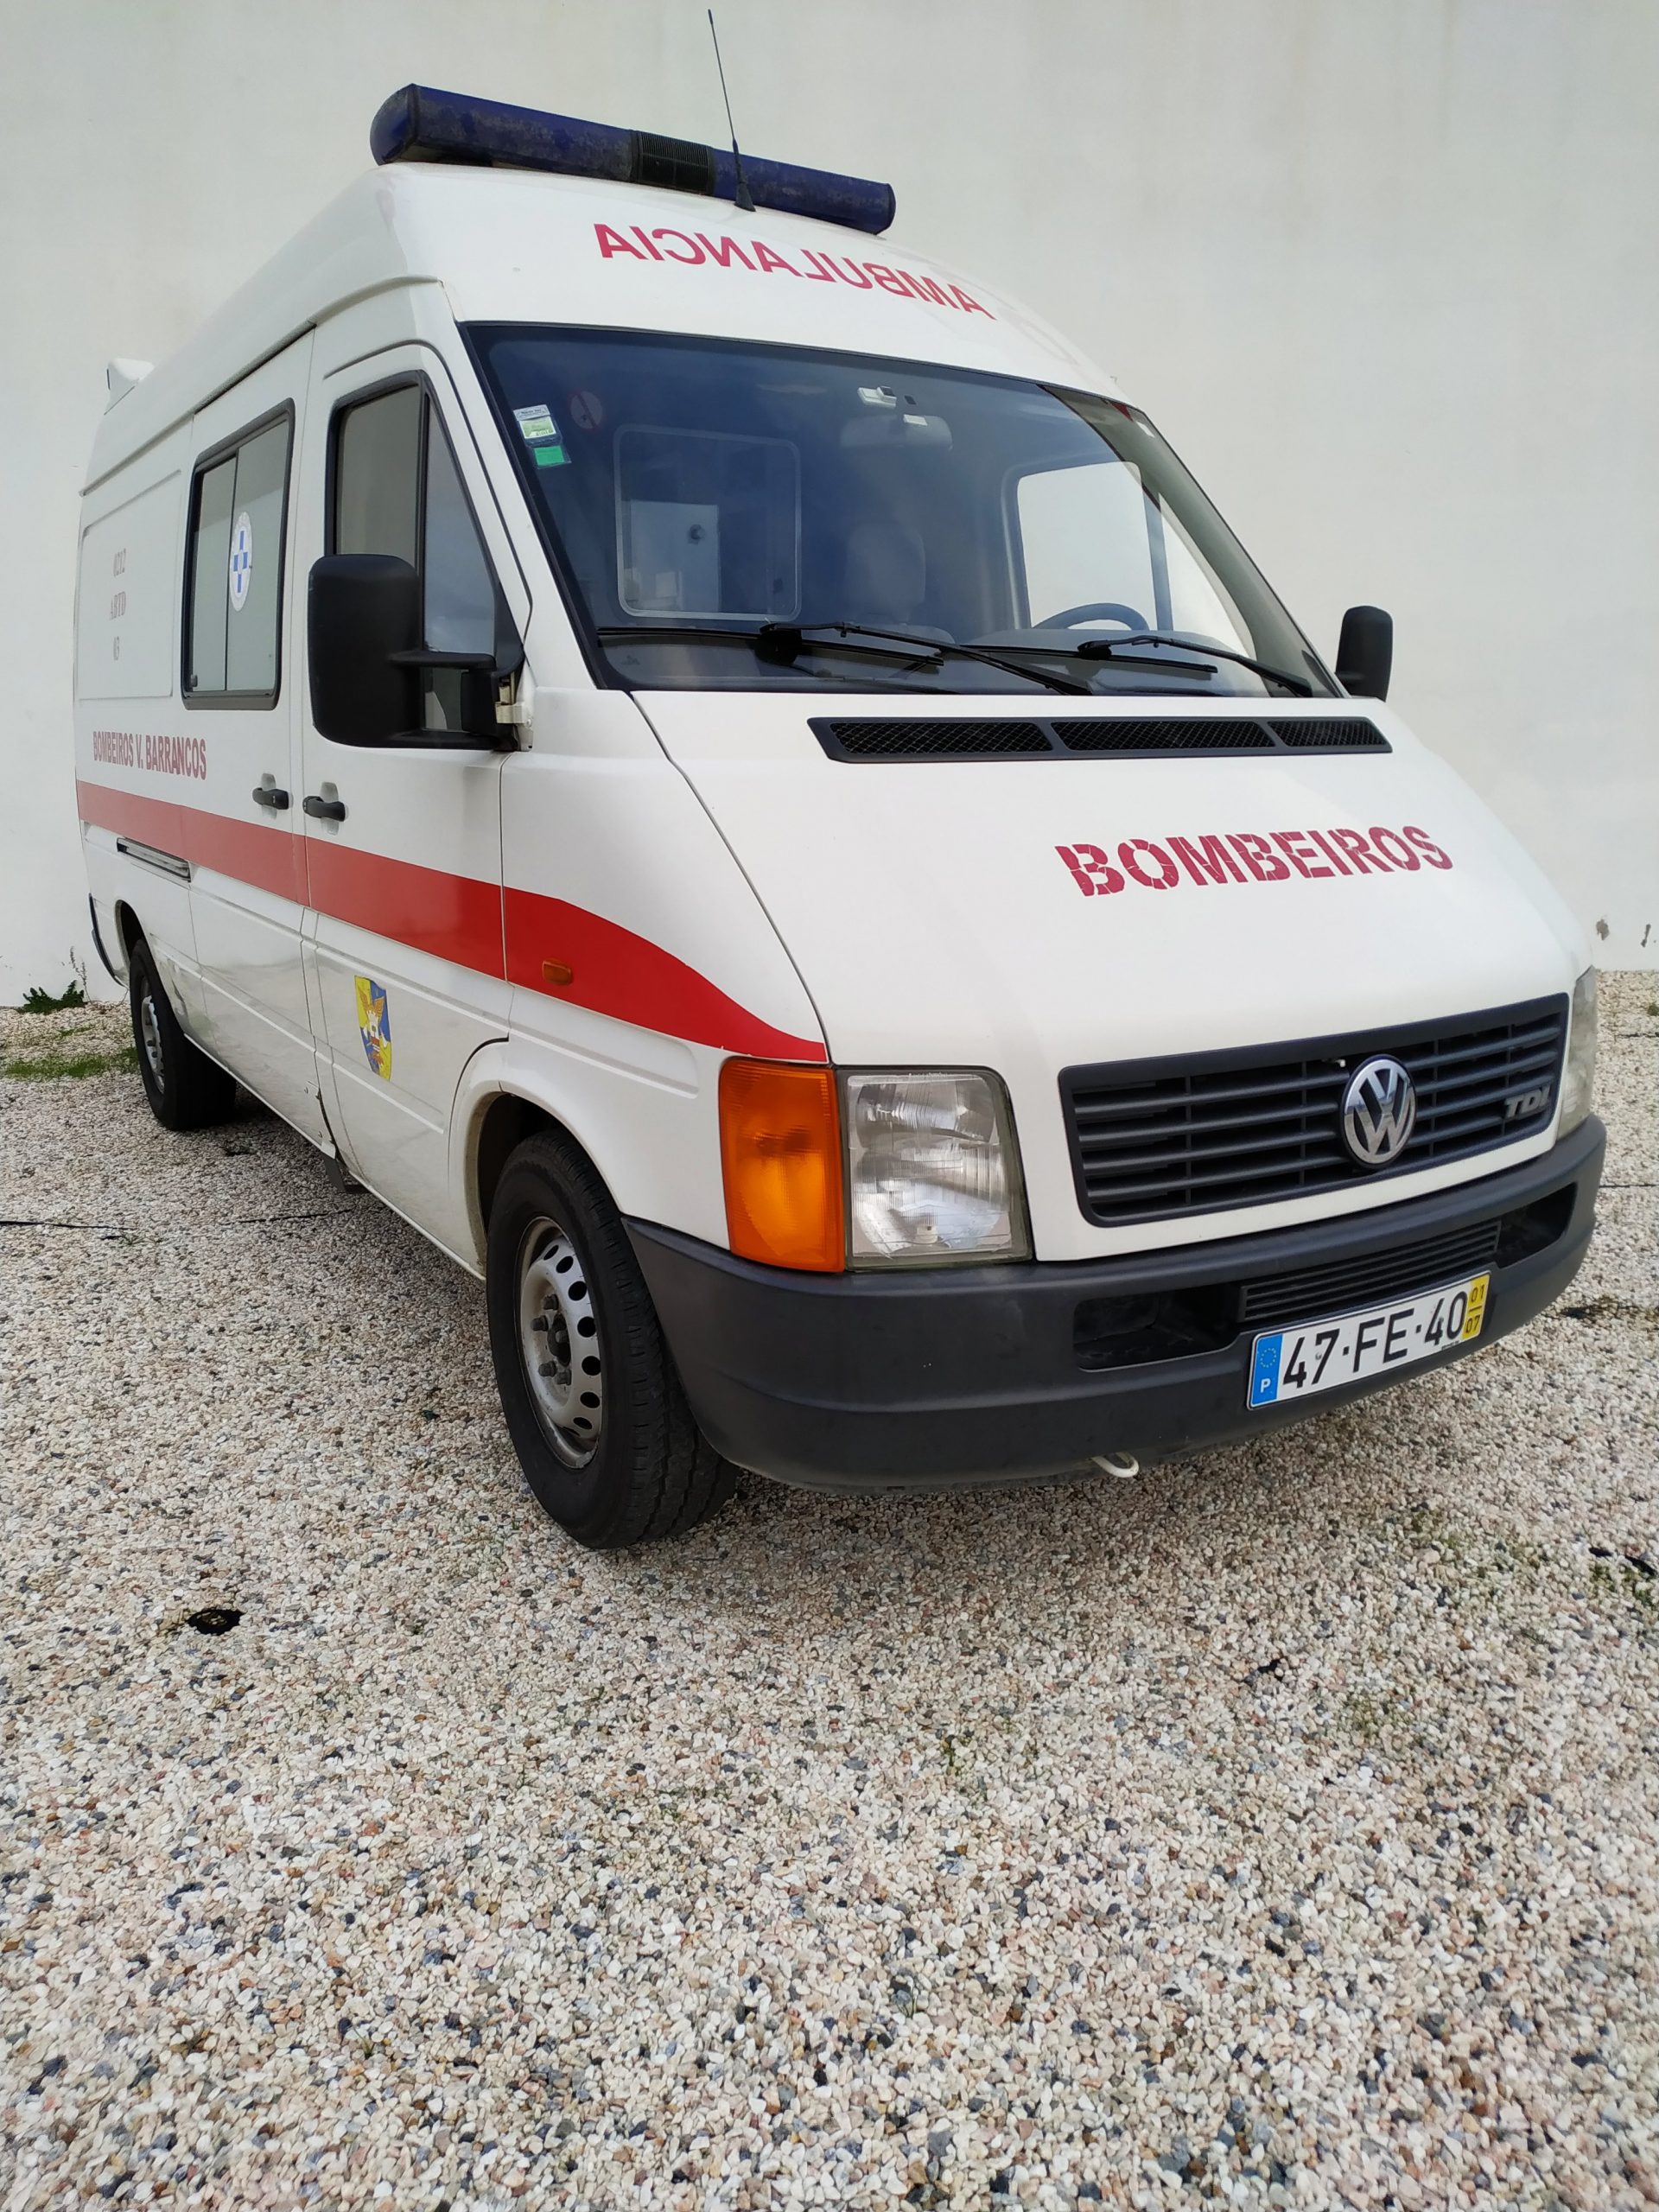 ABTD 03 - Ambulância de Transporte de Doentes - Tipo A1